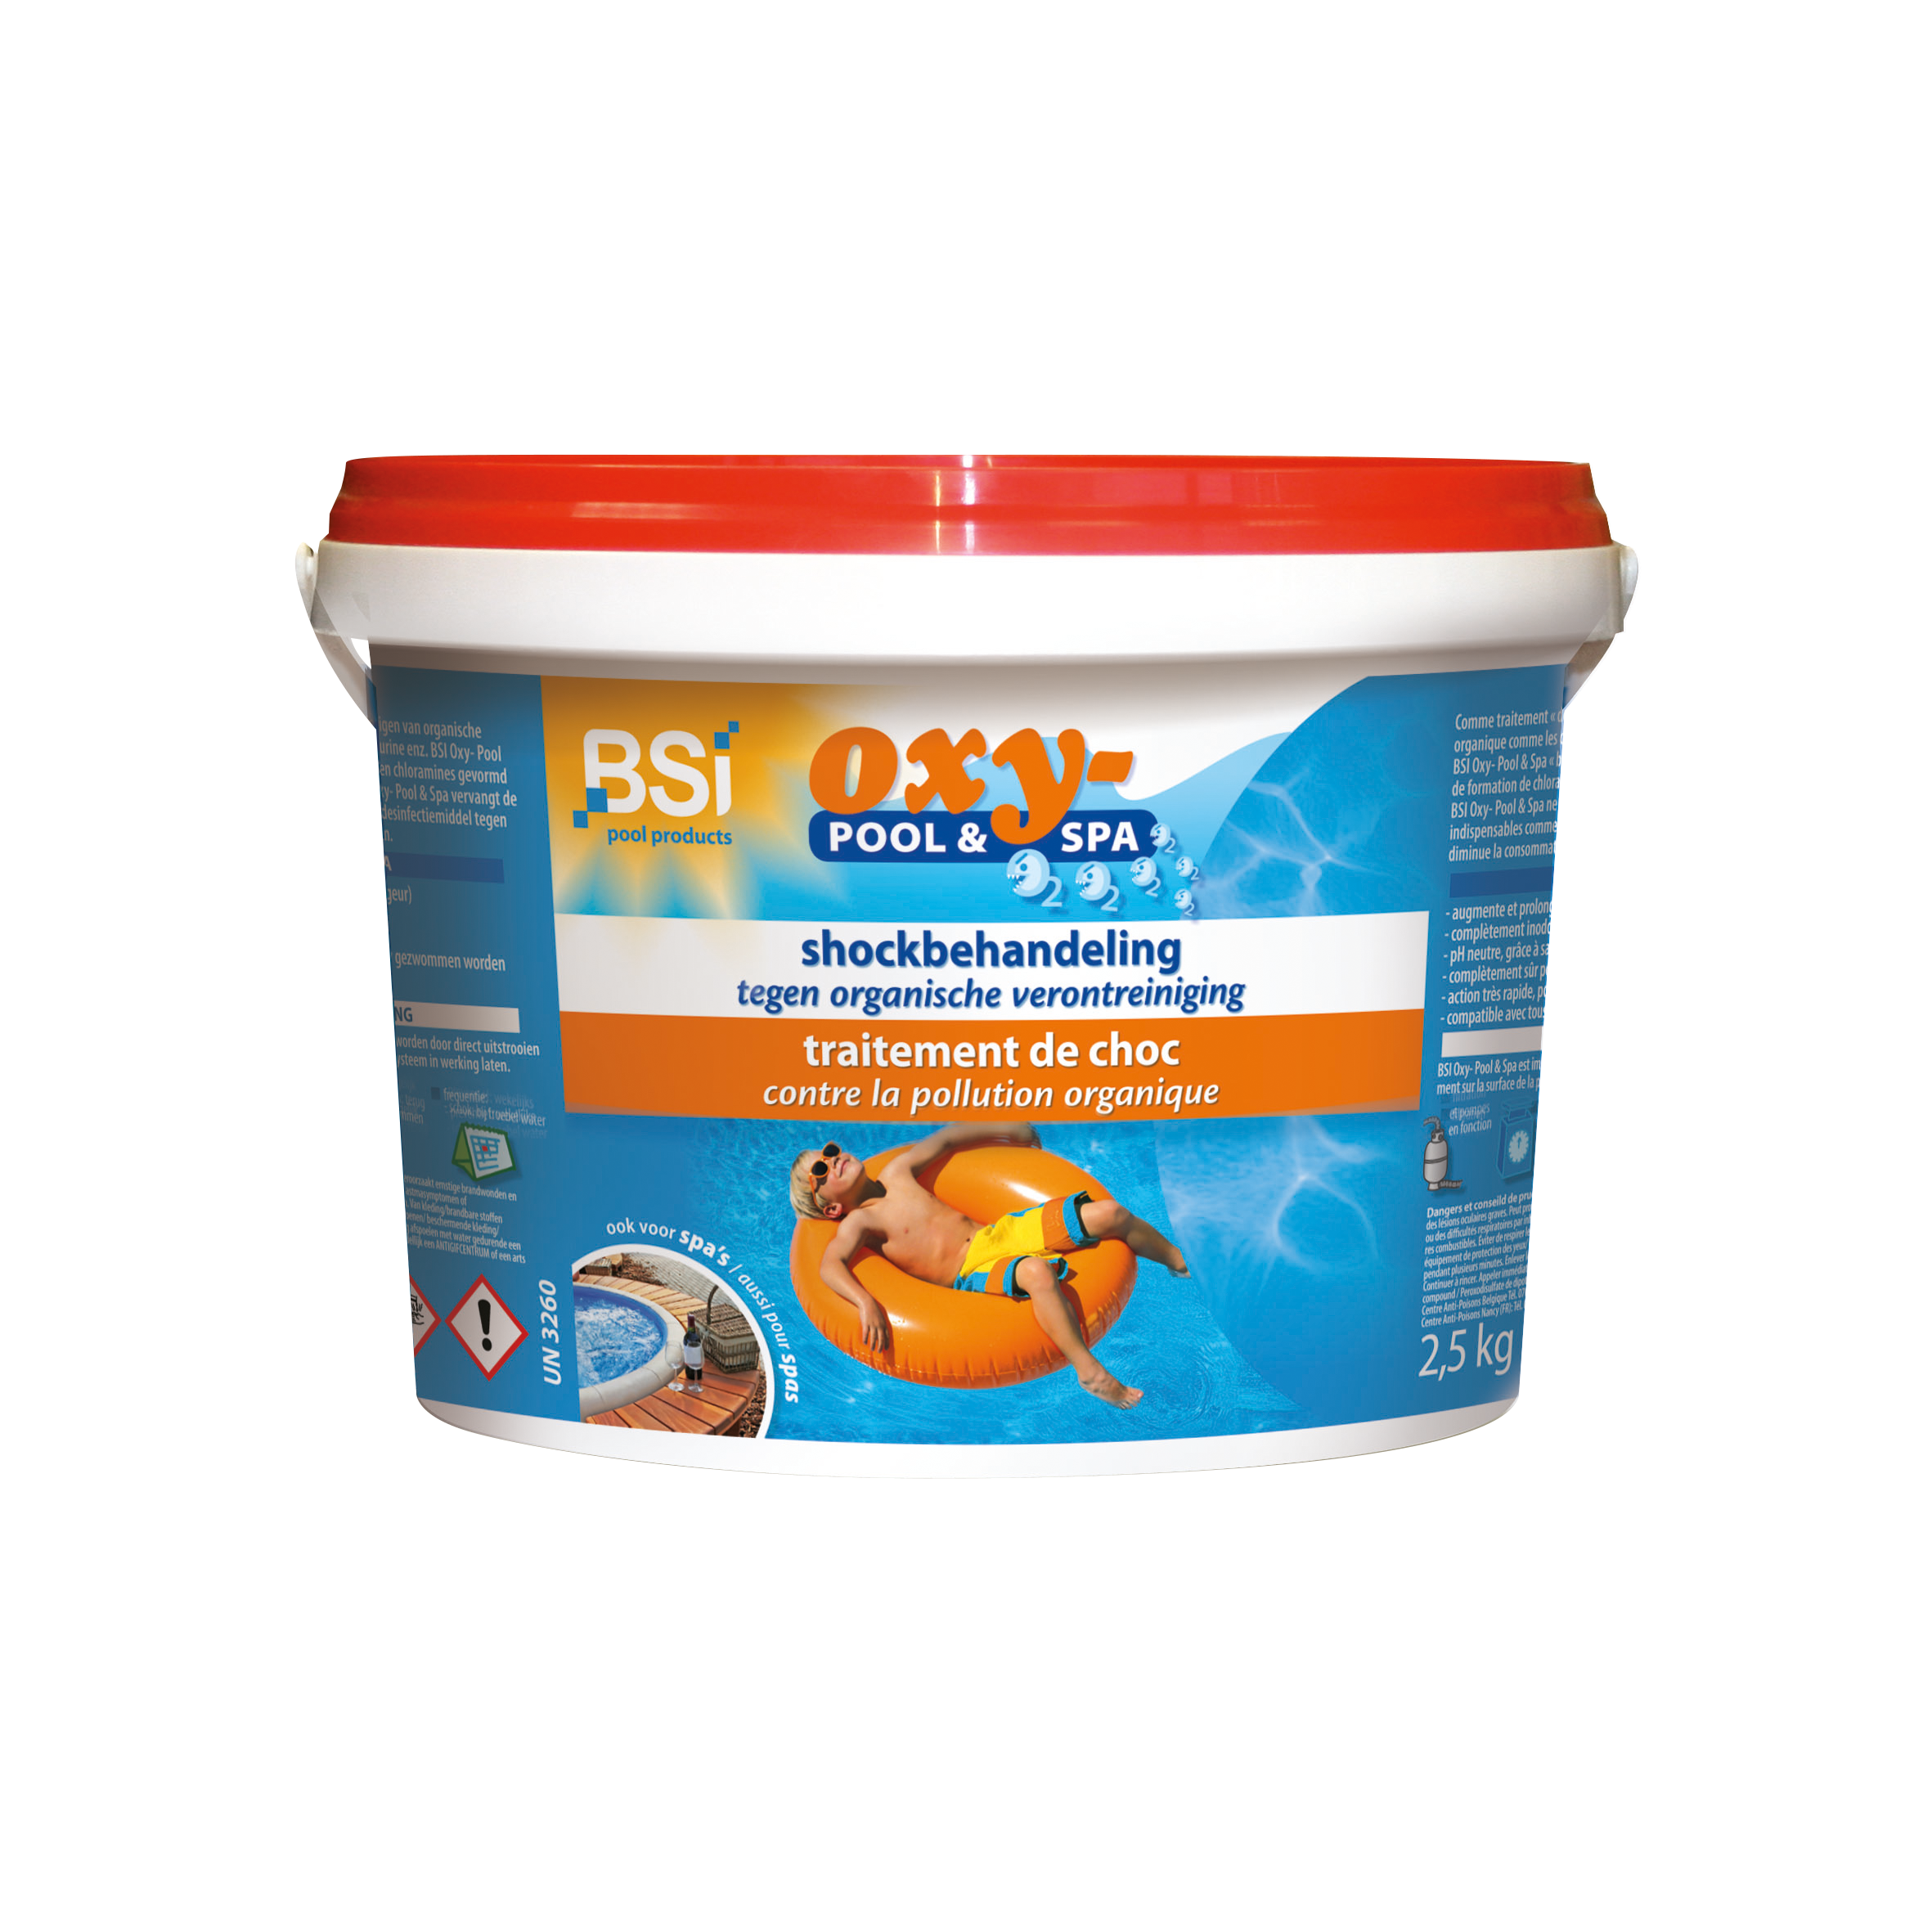 Oxy-pool & spa 2,5kg image